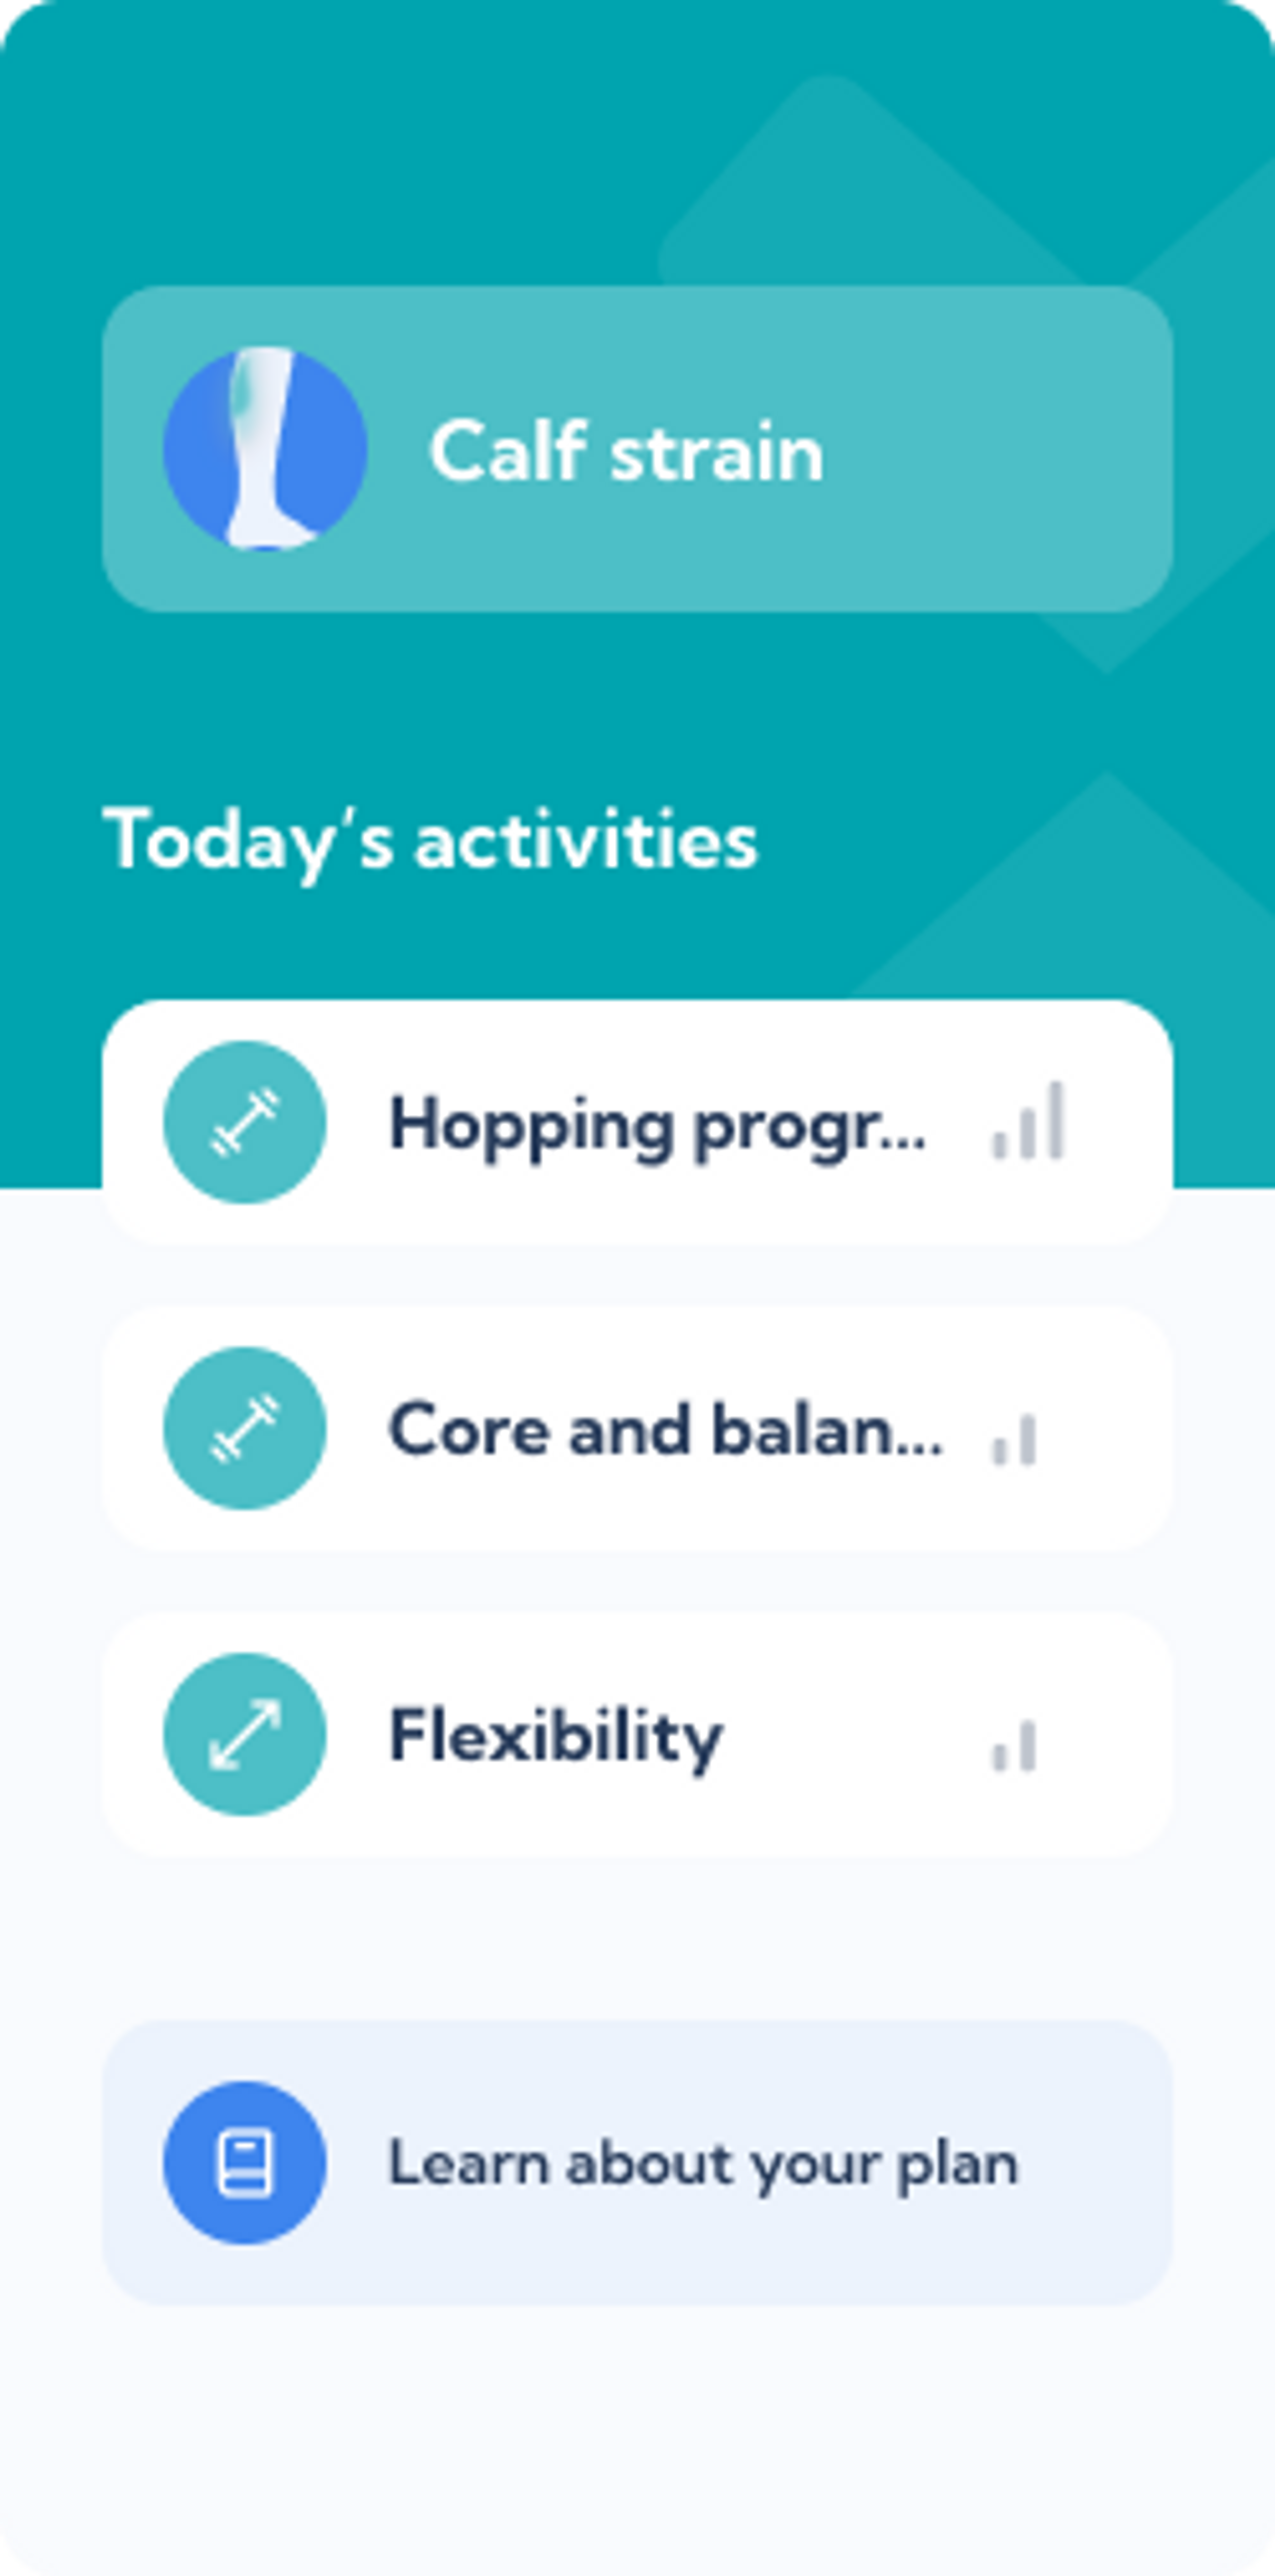 Calf strain rehab plan – Dashboard overview of the Exakt Health app